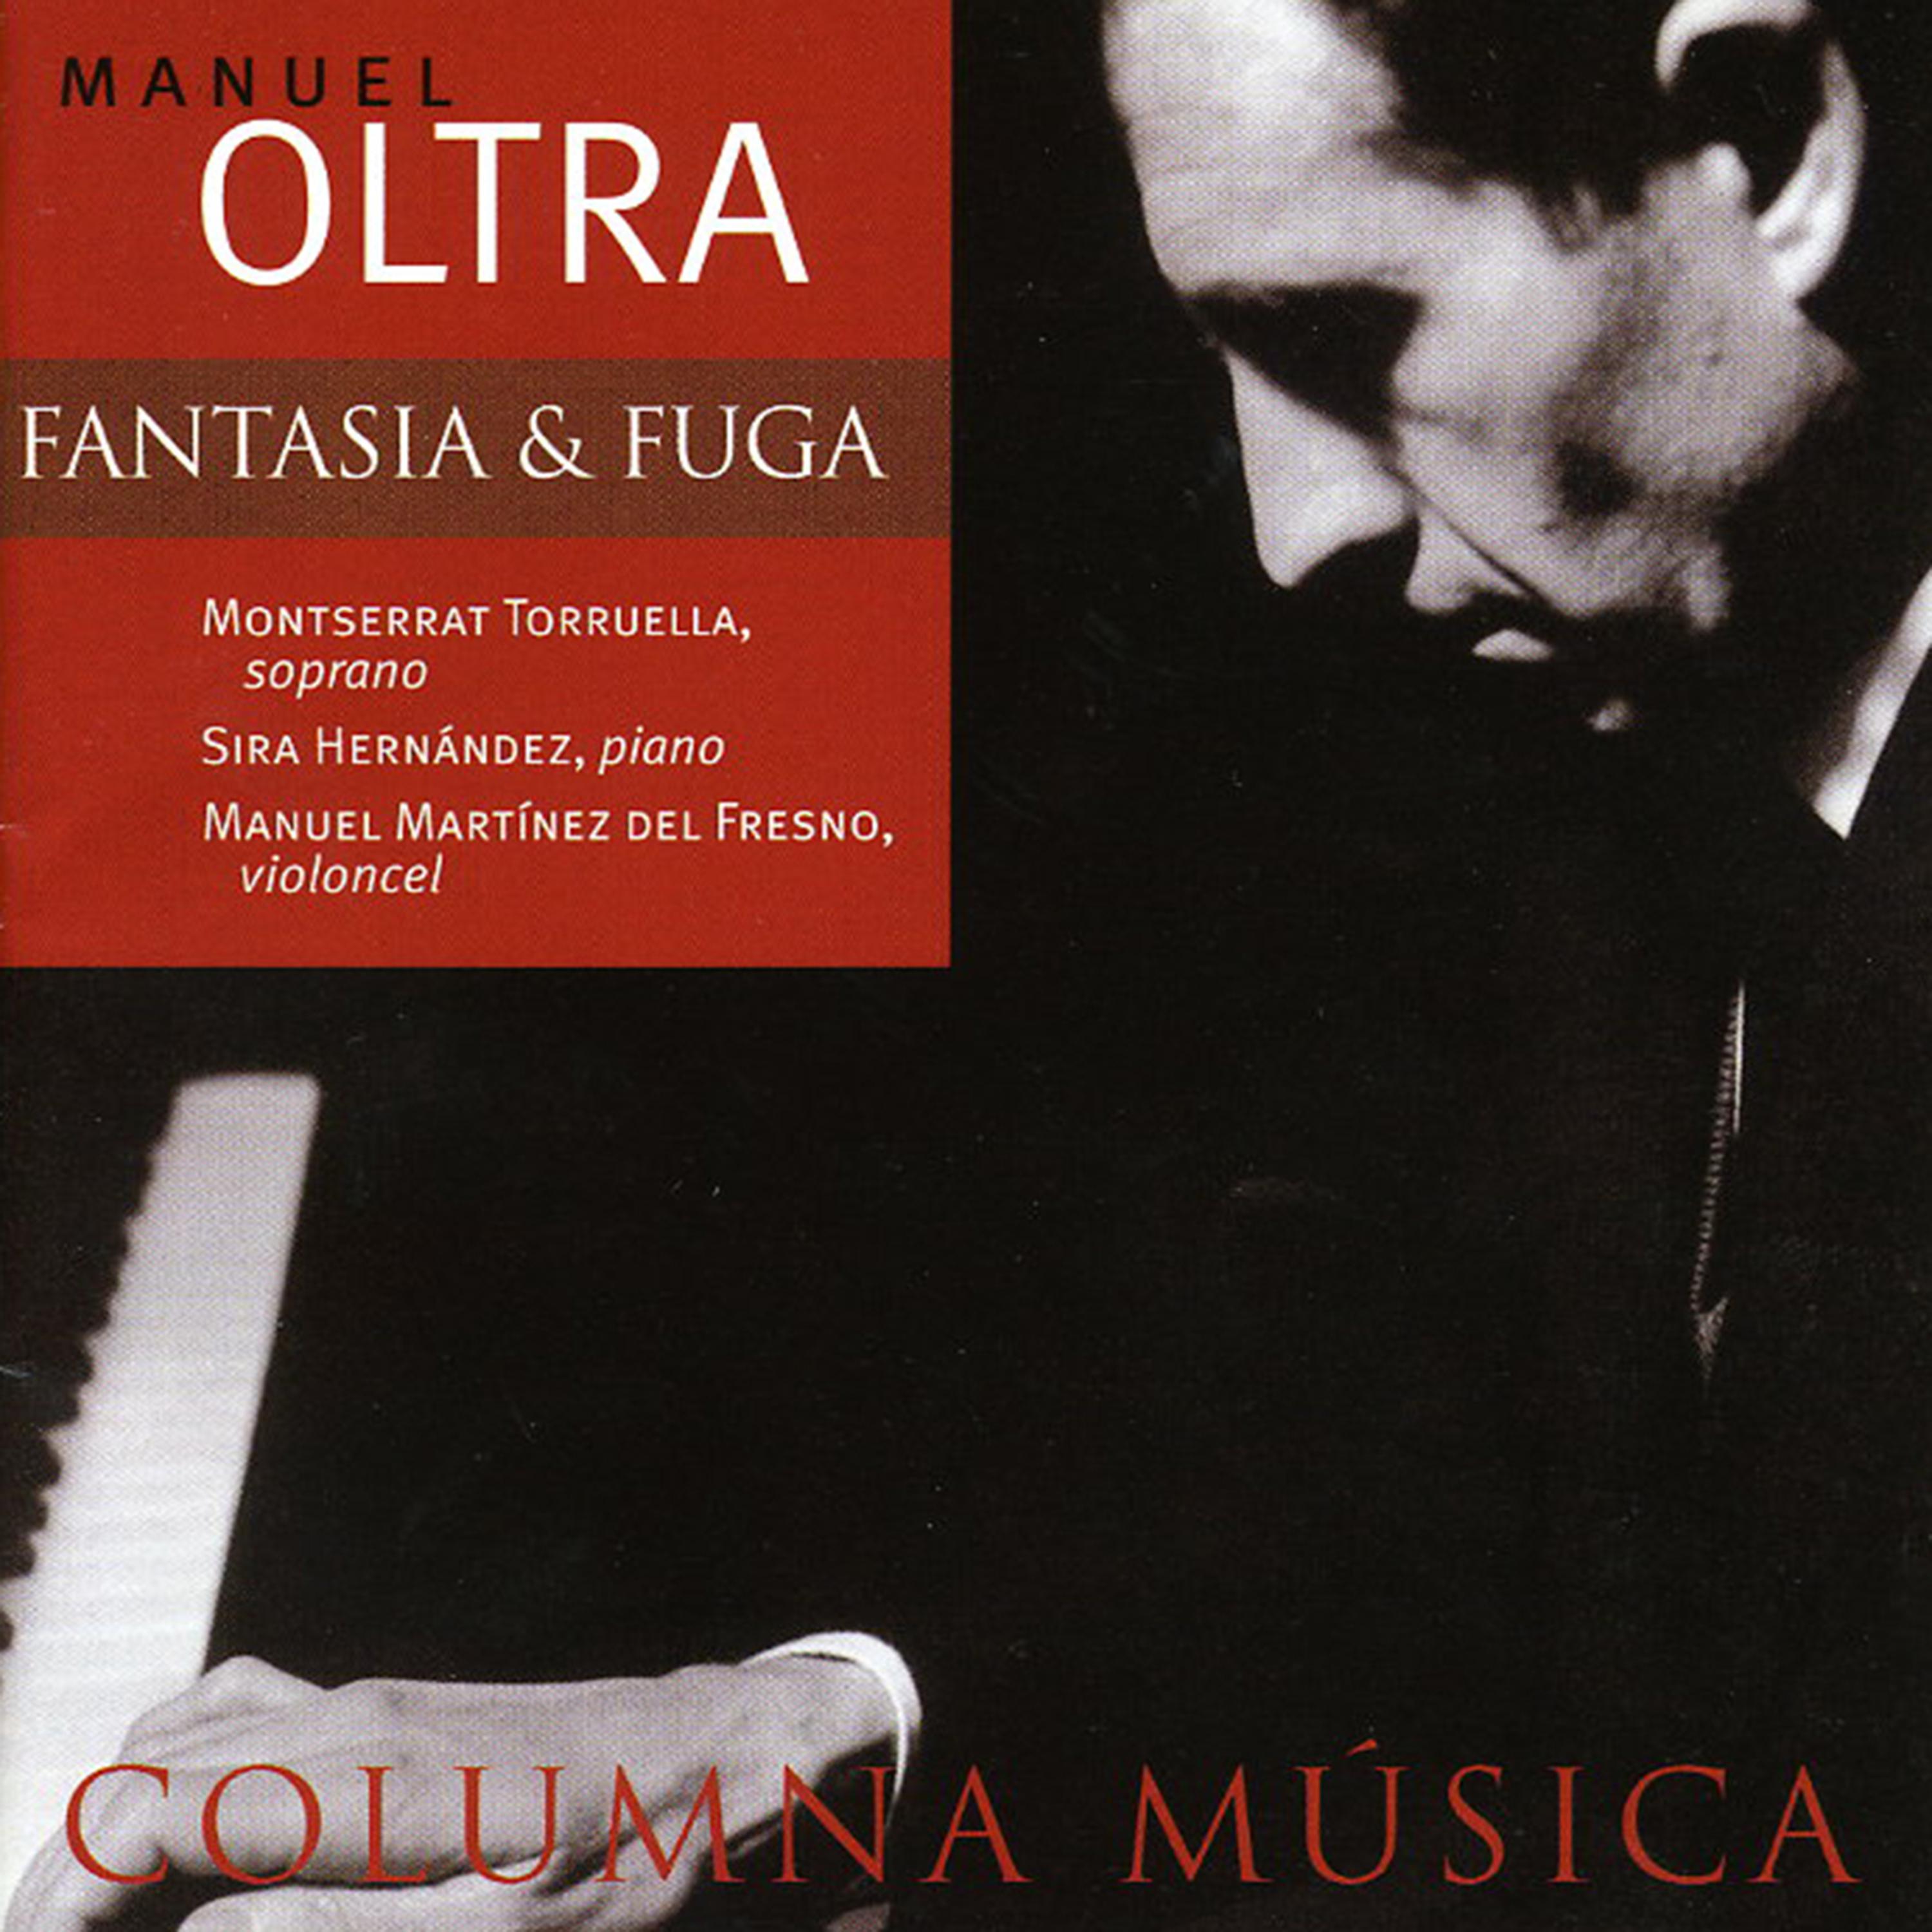 Постер альбома Manuel Oltra: Fantasia & Fuga